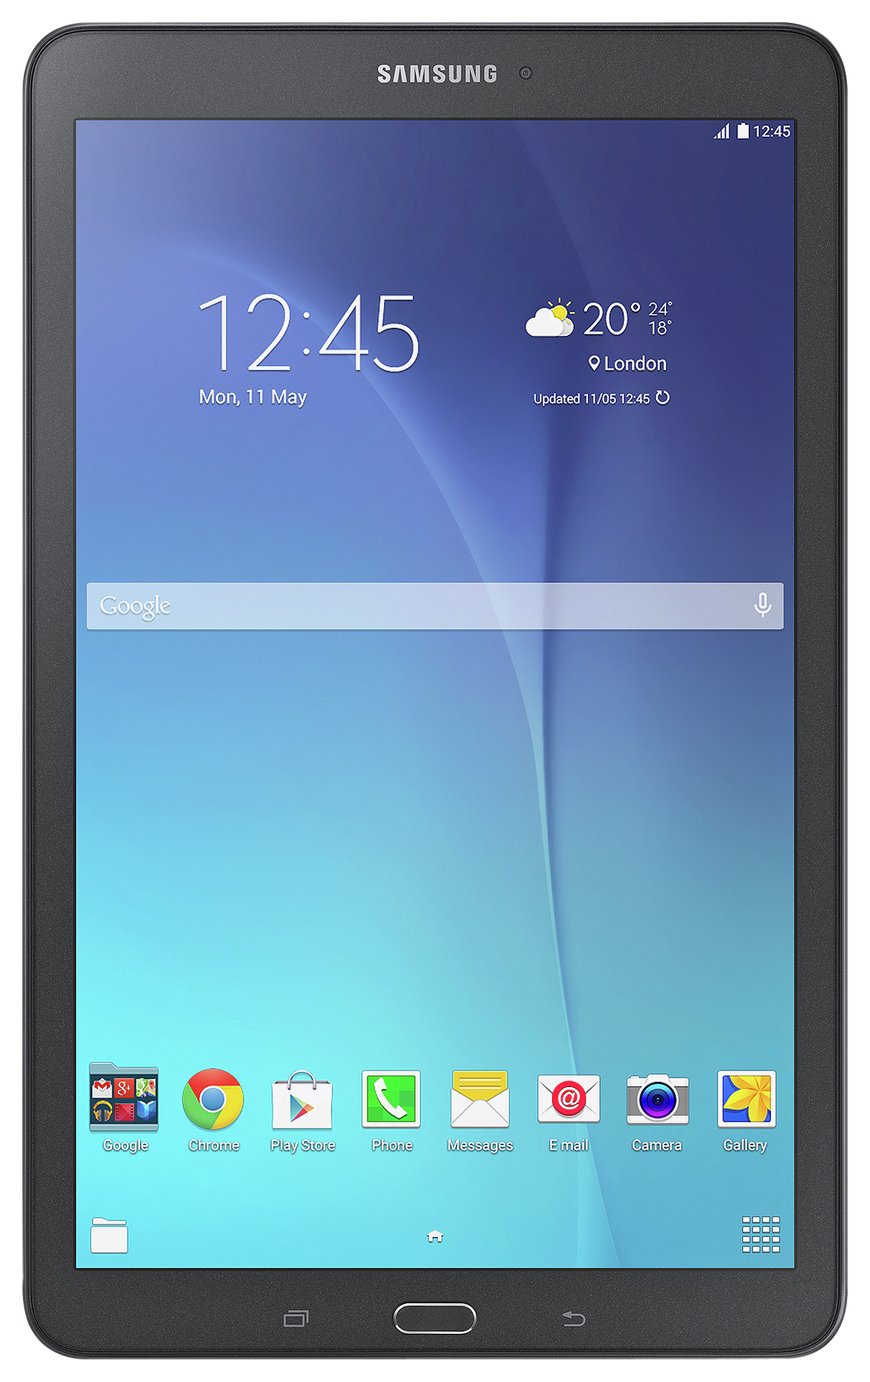 Samsung Galaxy Tab E 9.6 Inch 8GB Tablet - Black